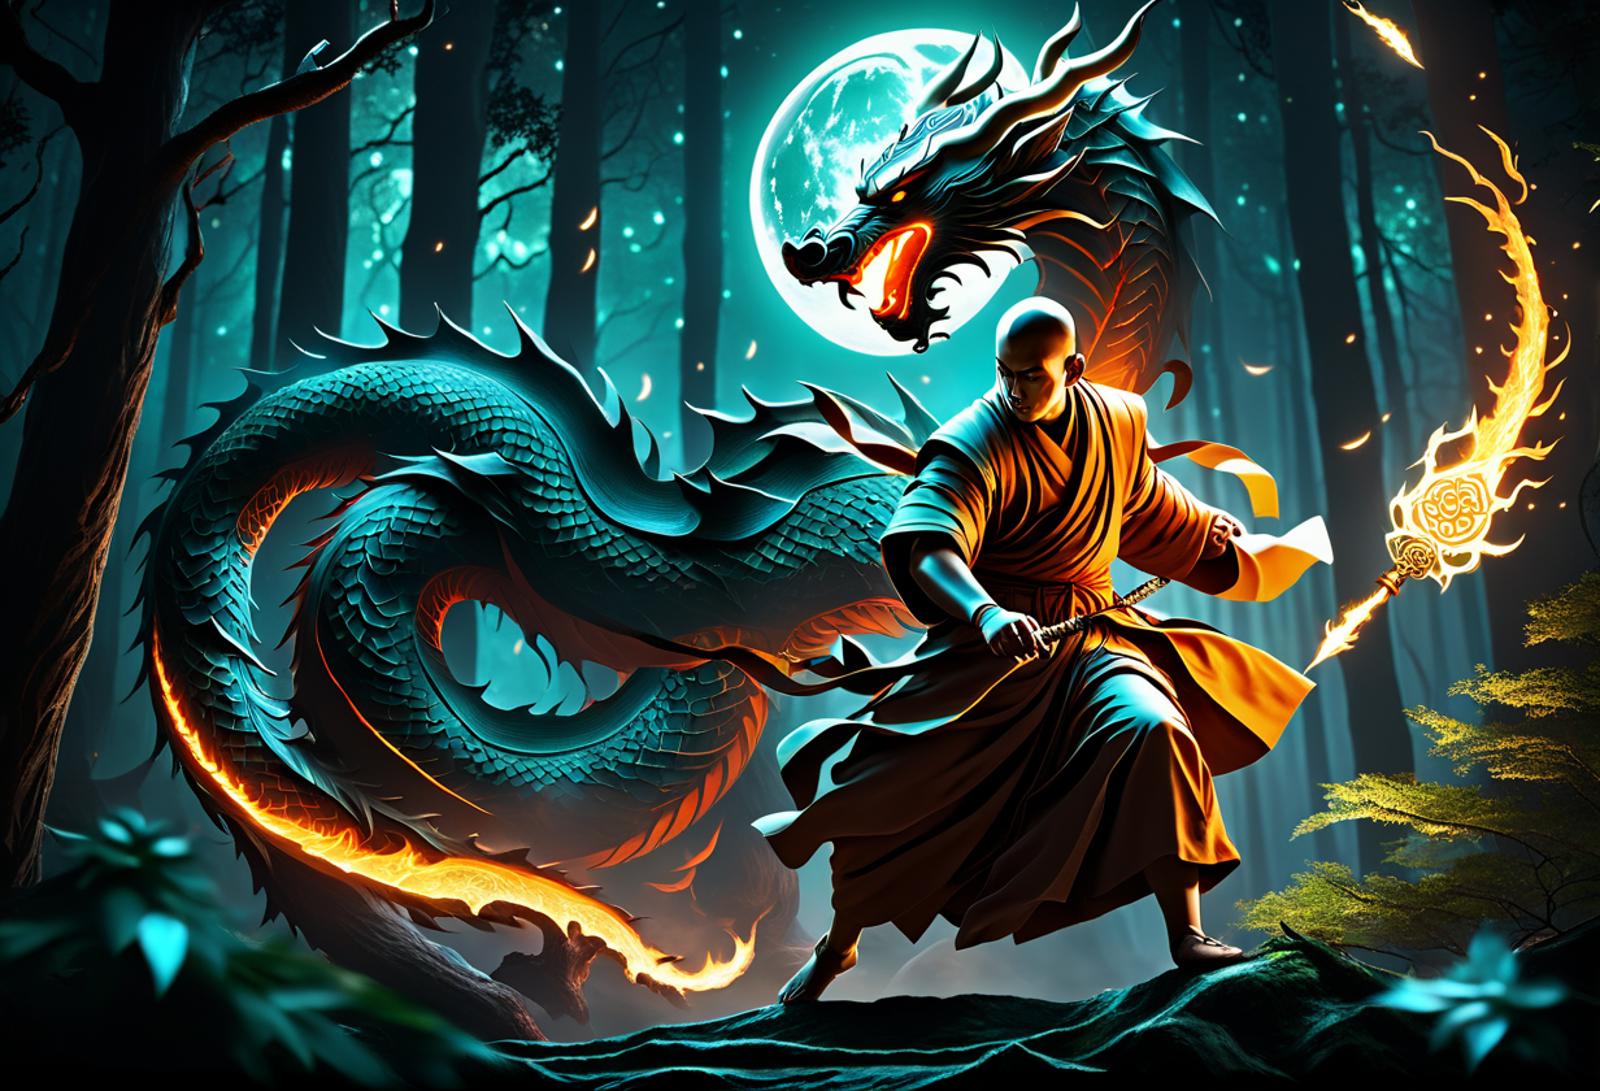 A Man Fighting a Dragon in a Dark Forest